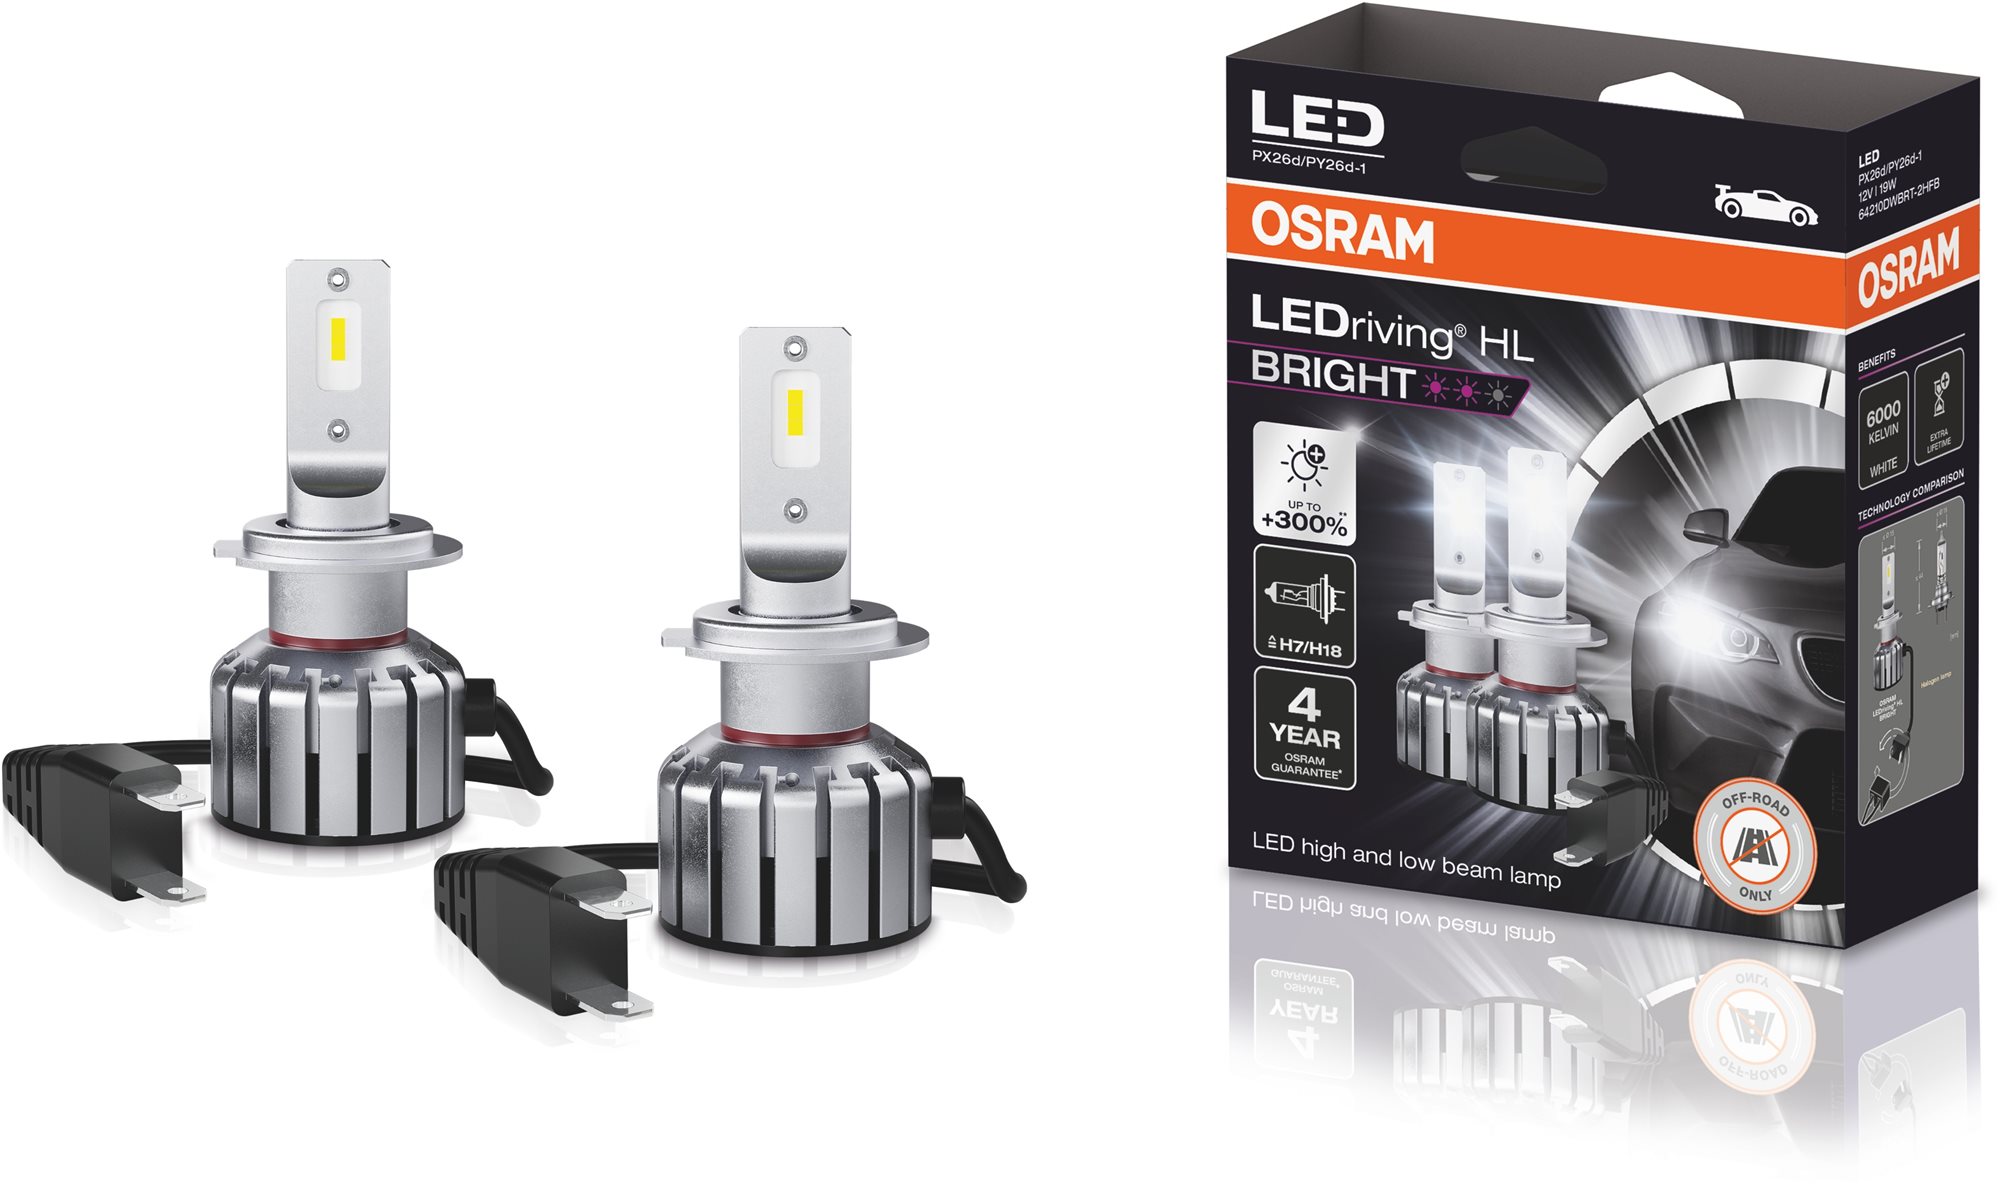 OSRAM LEDriving HL BRIGHT +300% 